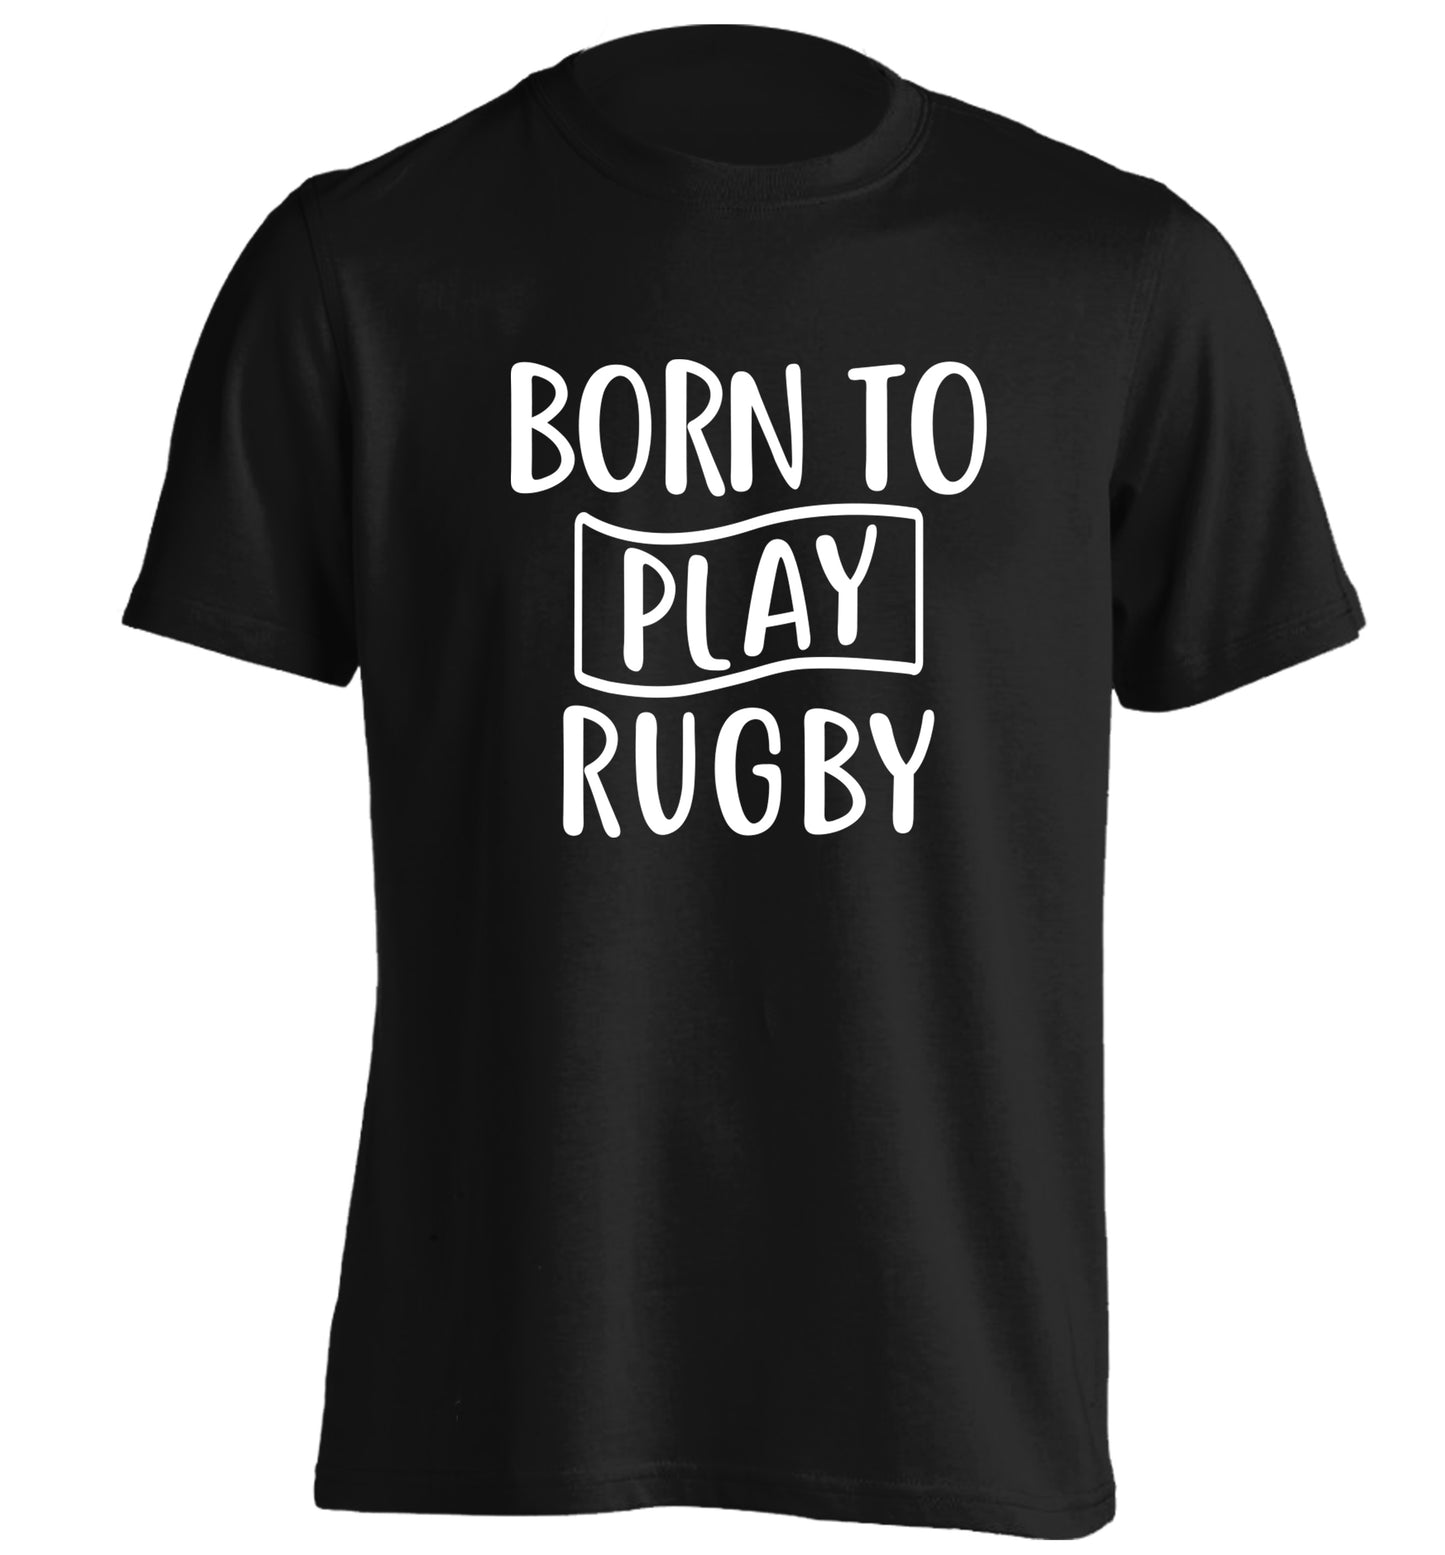 Born to play rugby adults unisex black Tshirt 2XL